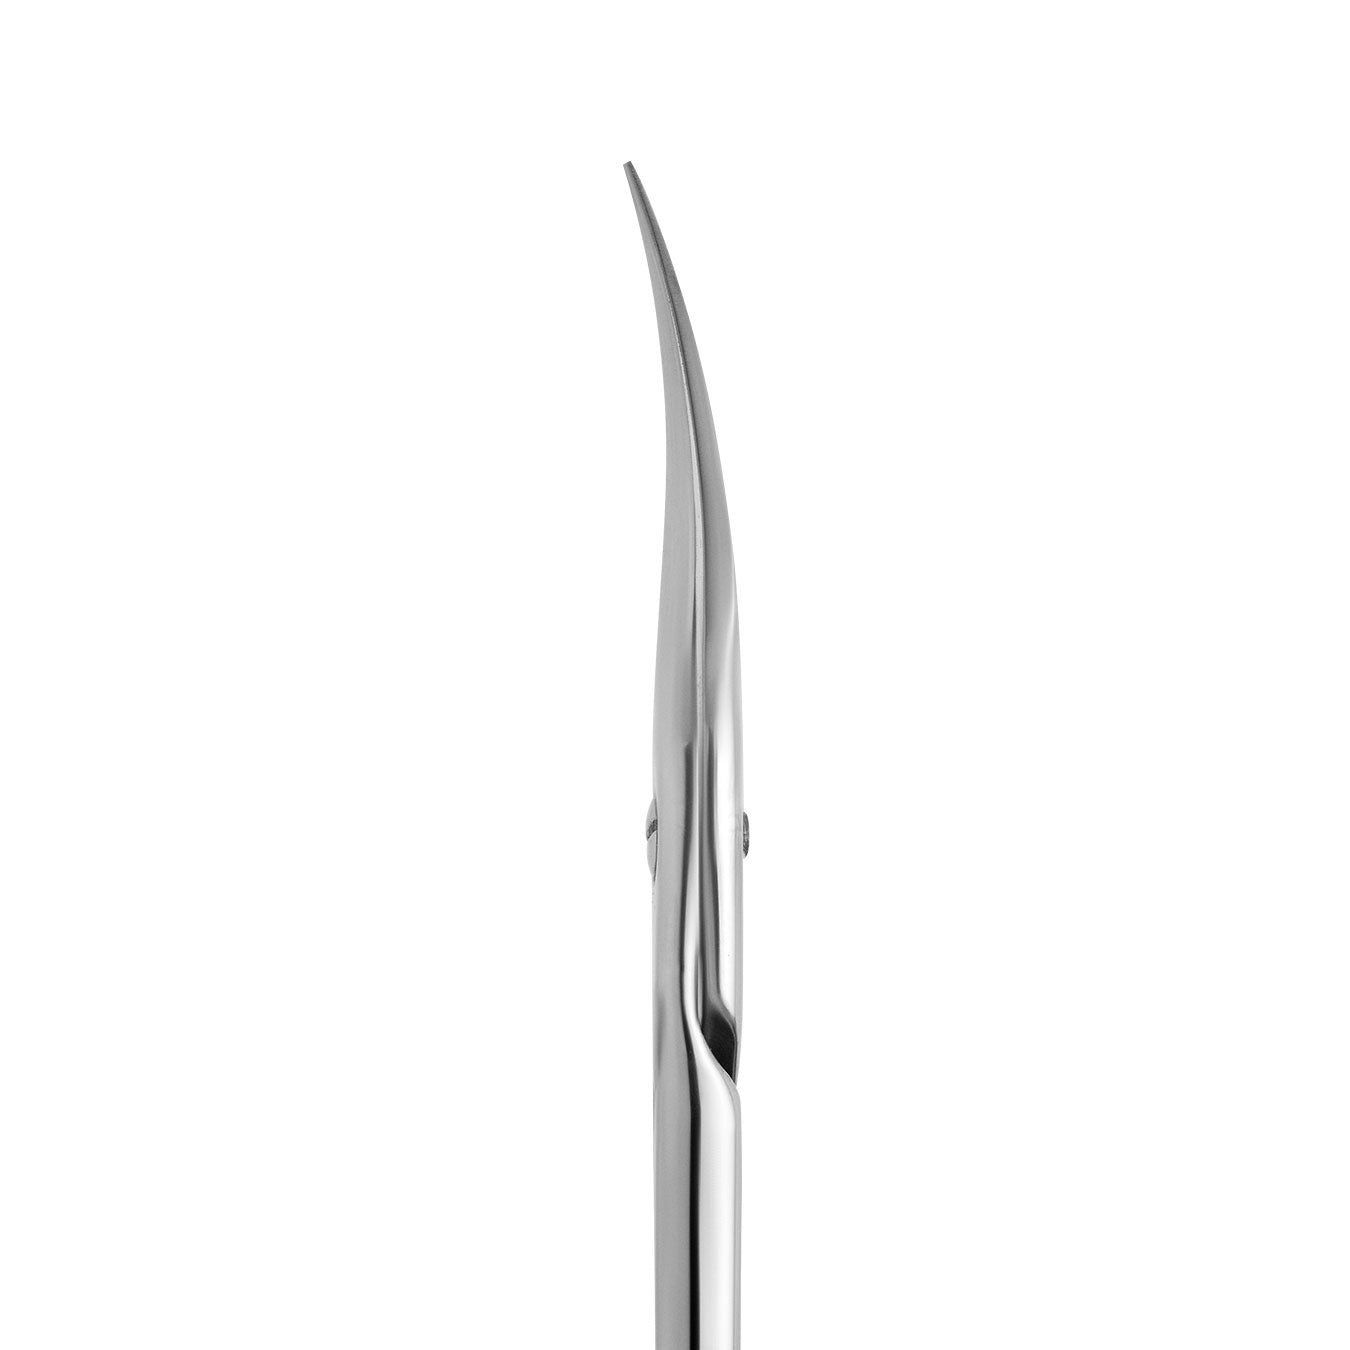 Staleks Pro Expert 50 Type 2 Cuticle Scissors SE-50/2